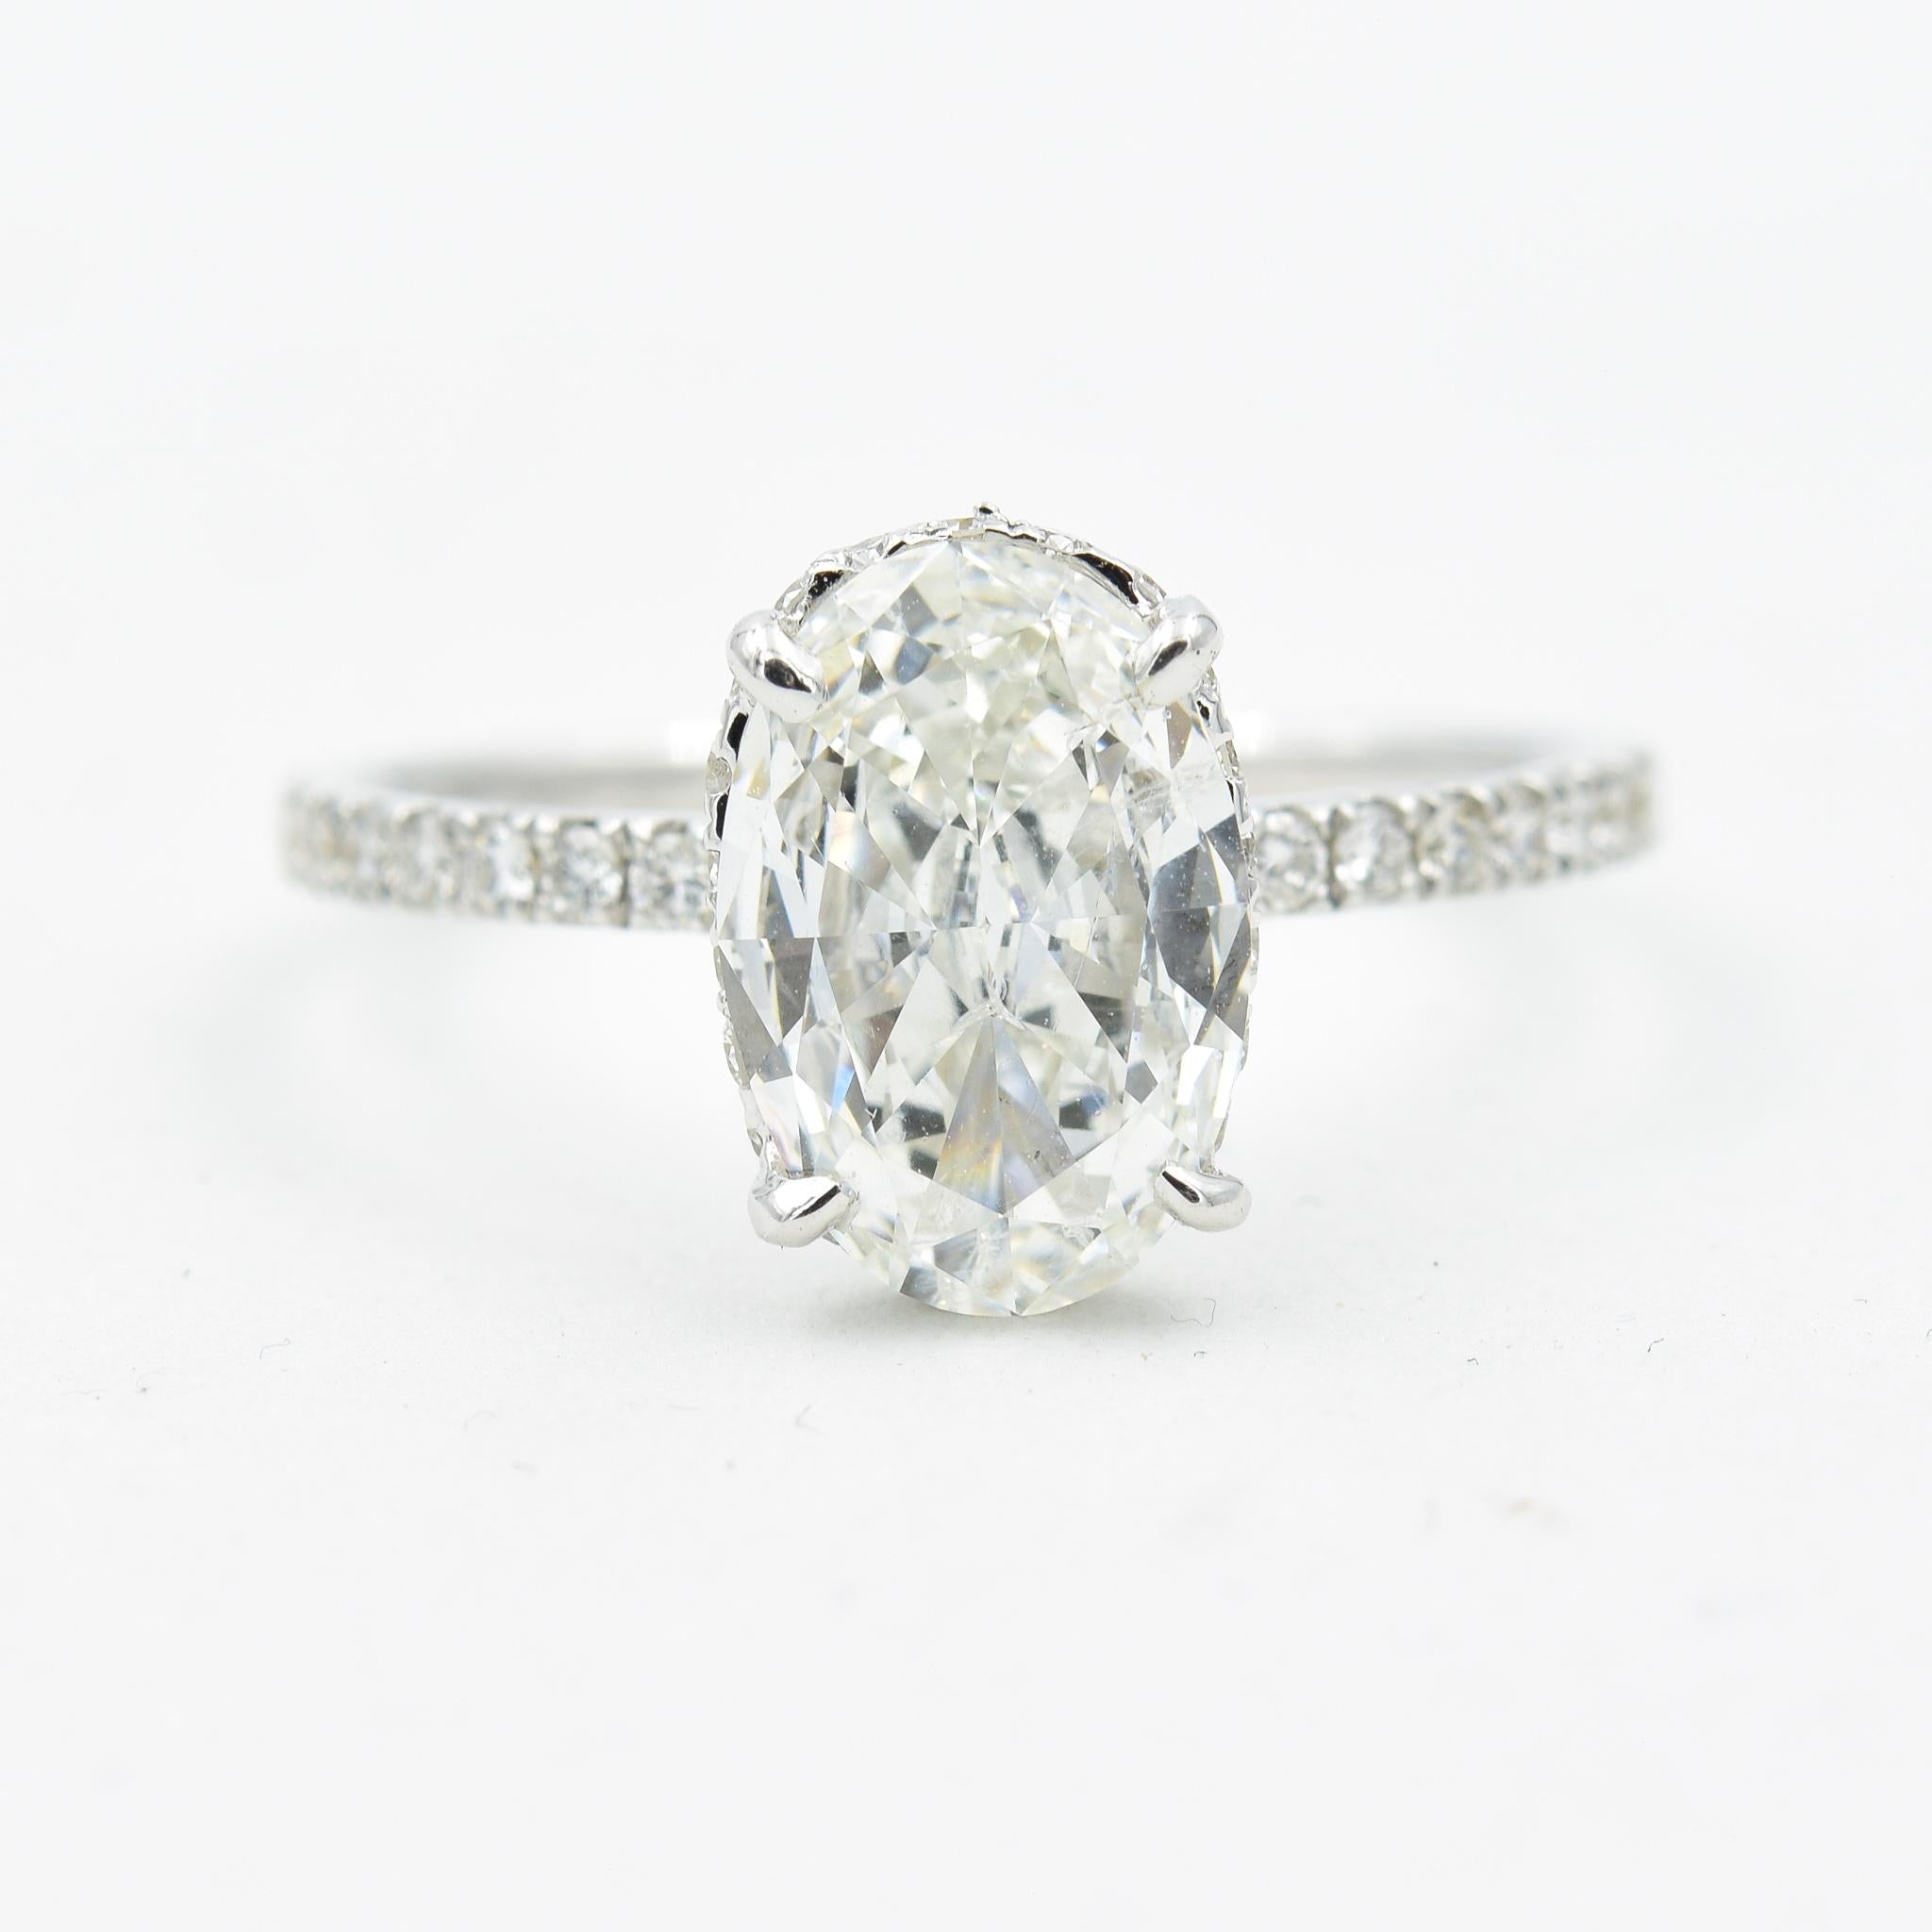 18k White Gold
Finger Size: 6.25
Diamond Qualities:	G color I1 clarity
Diamond Weight: 1.51ct
Diamond Shape: Oval